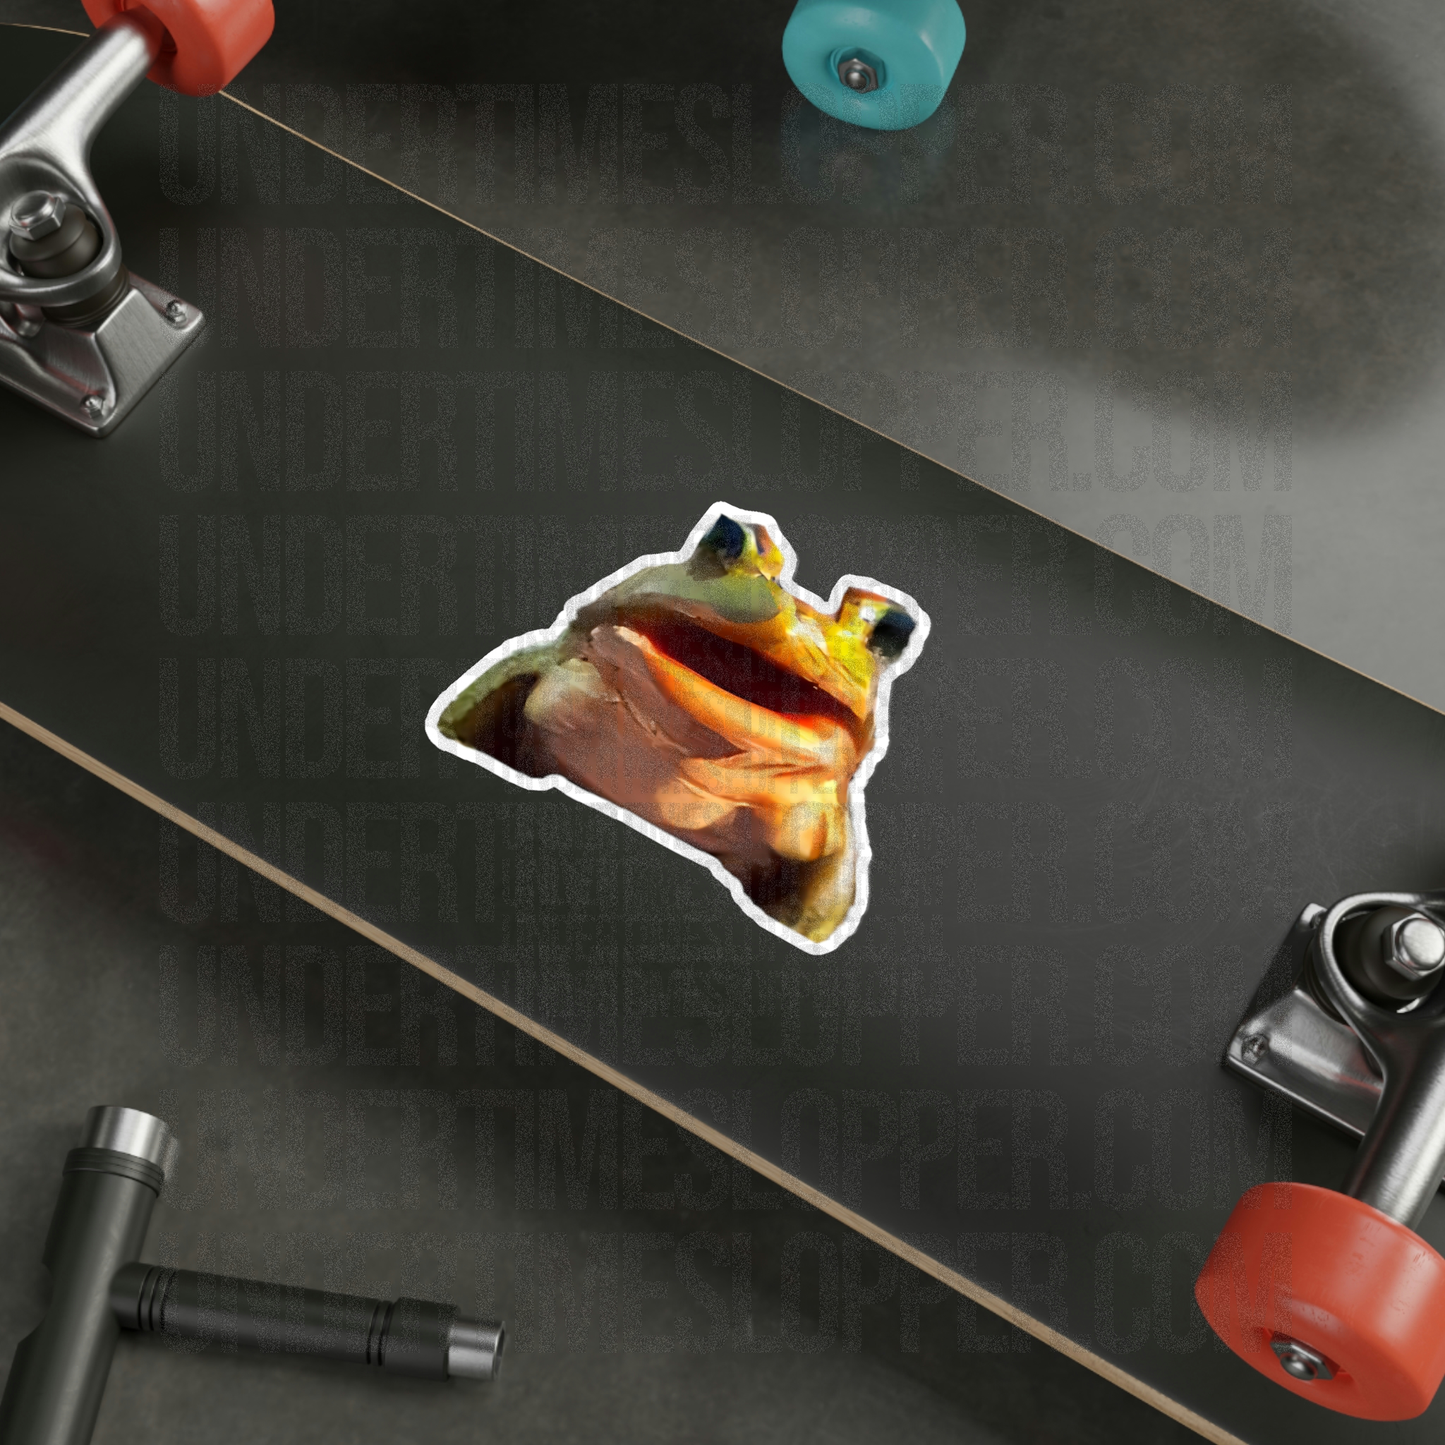 Frog | Official Undertime Slopper Sticker